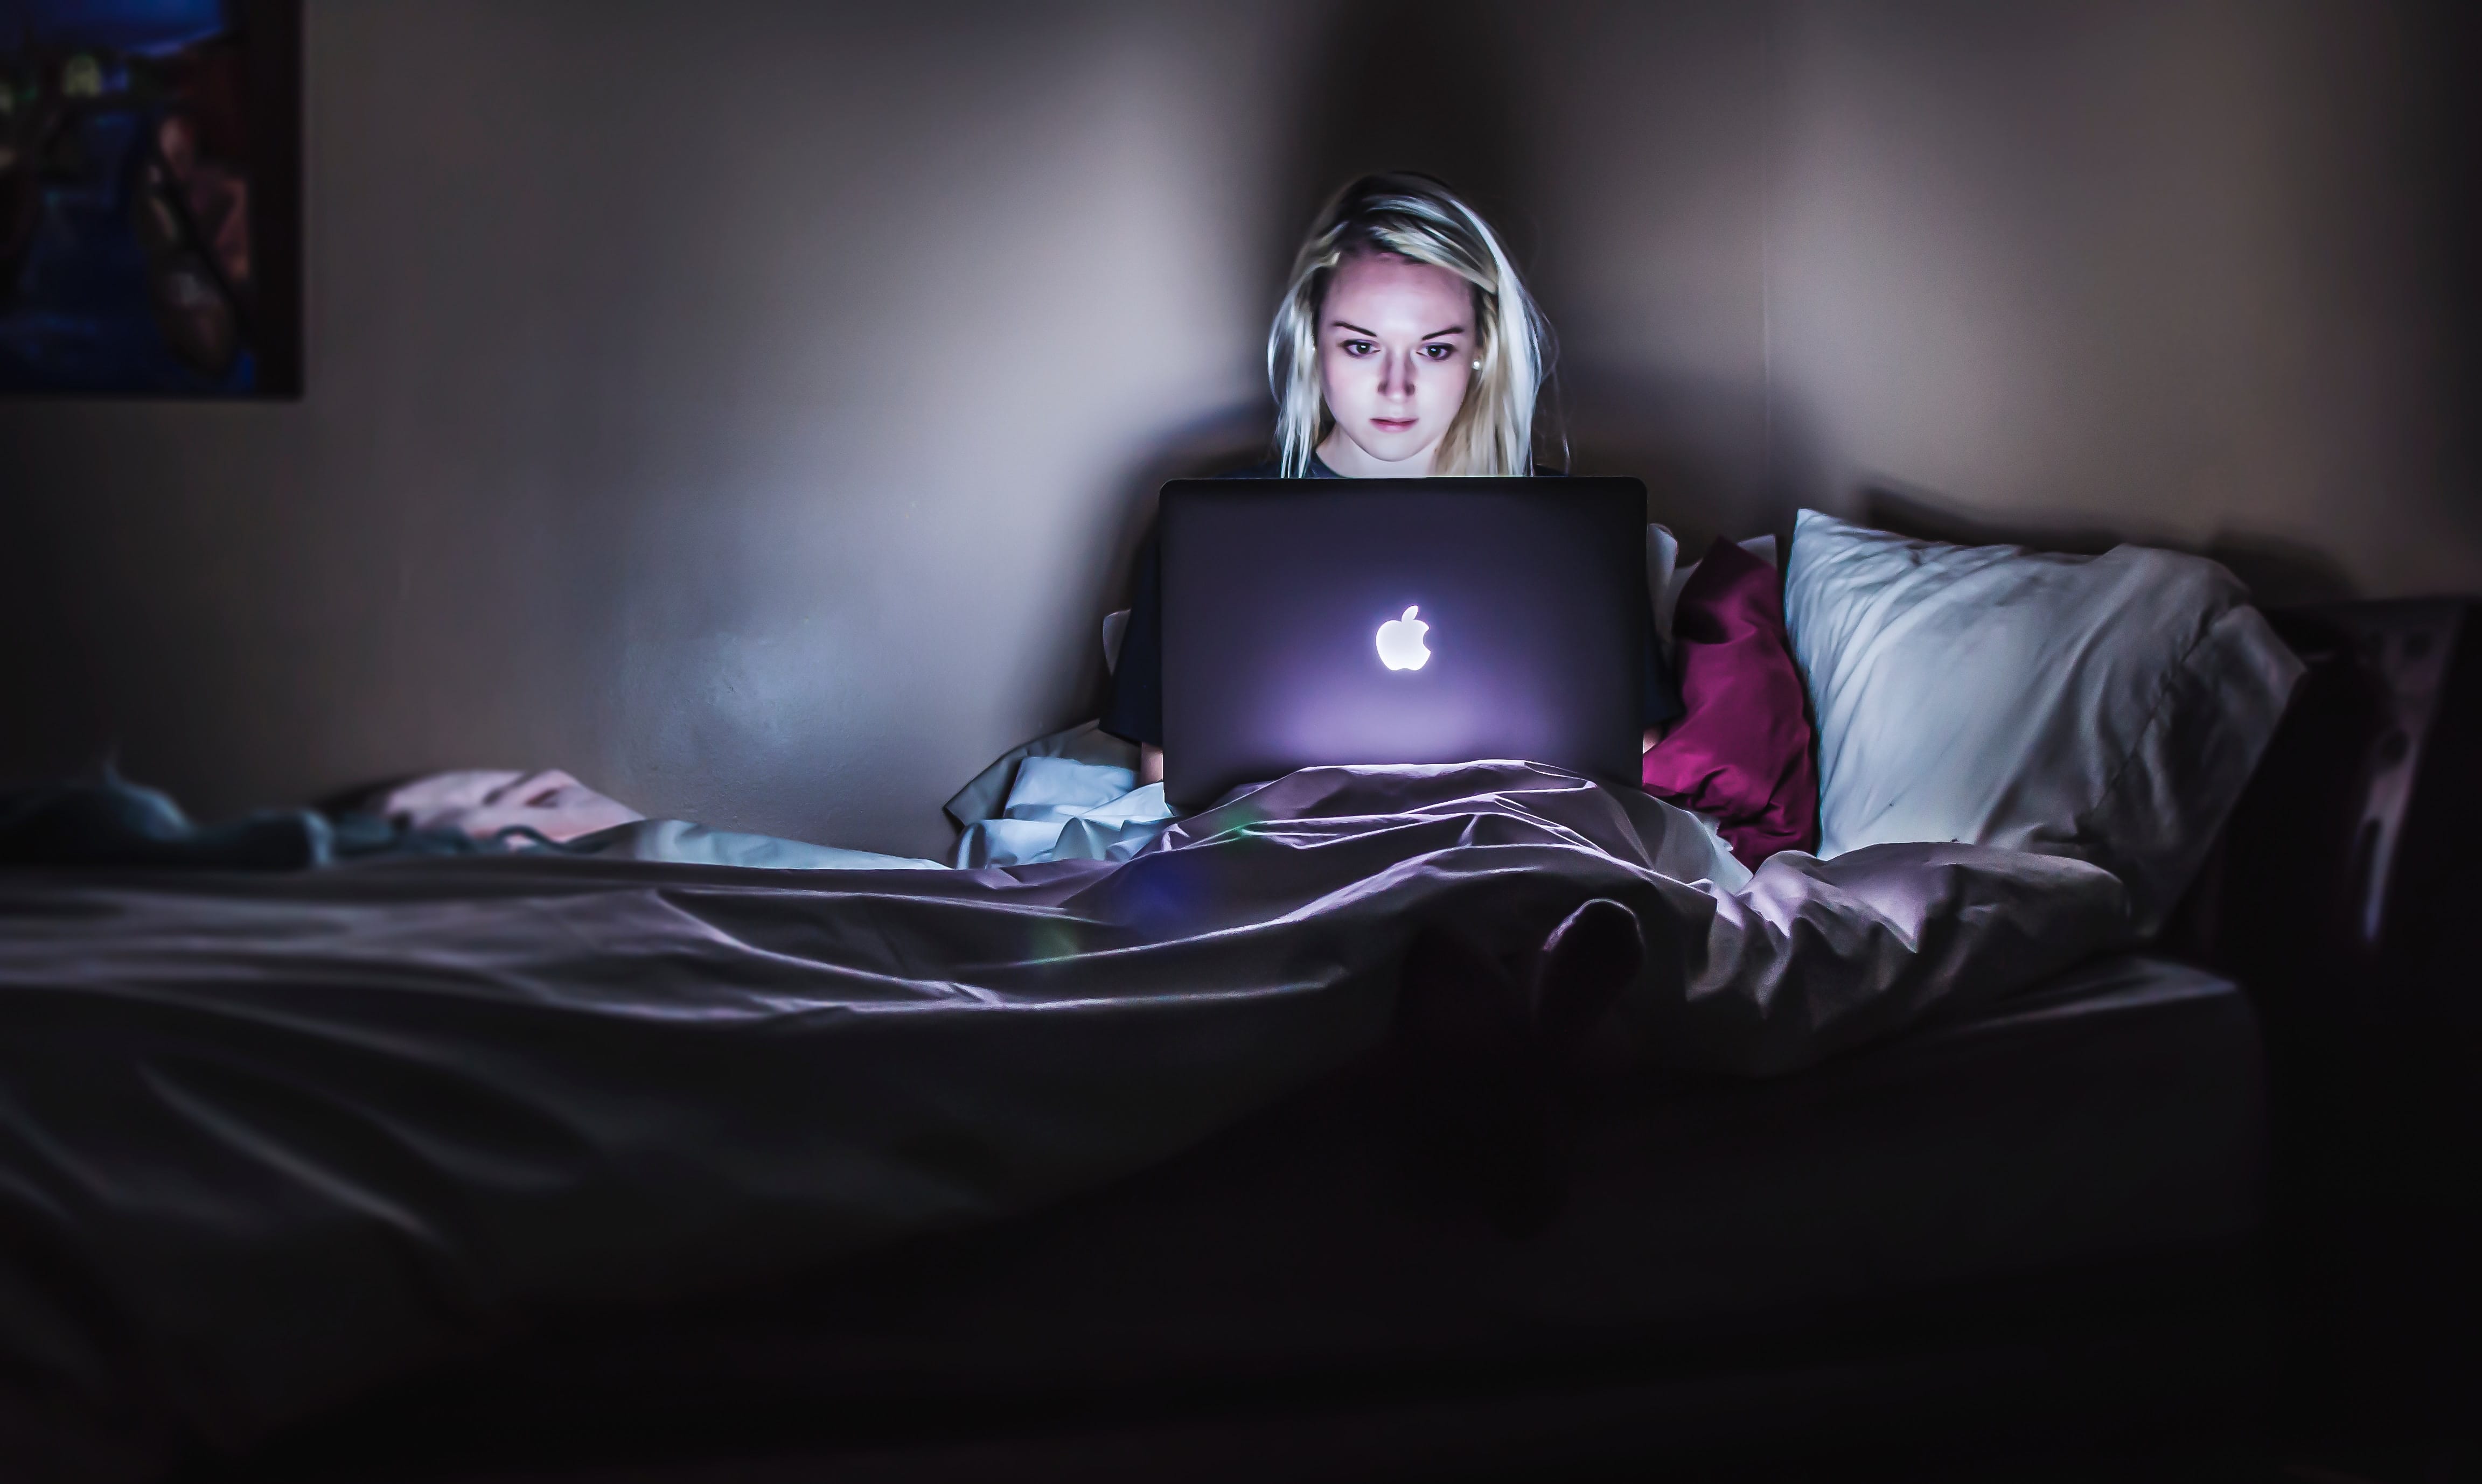 Woman using MacBook in bed; image by Victoria Heath, via Unsplash.com.